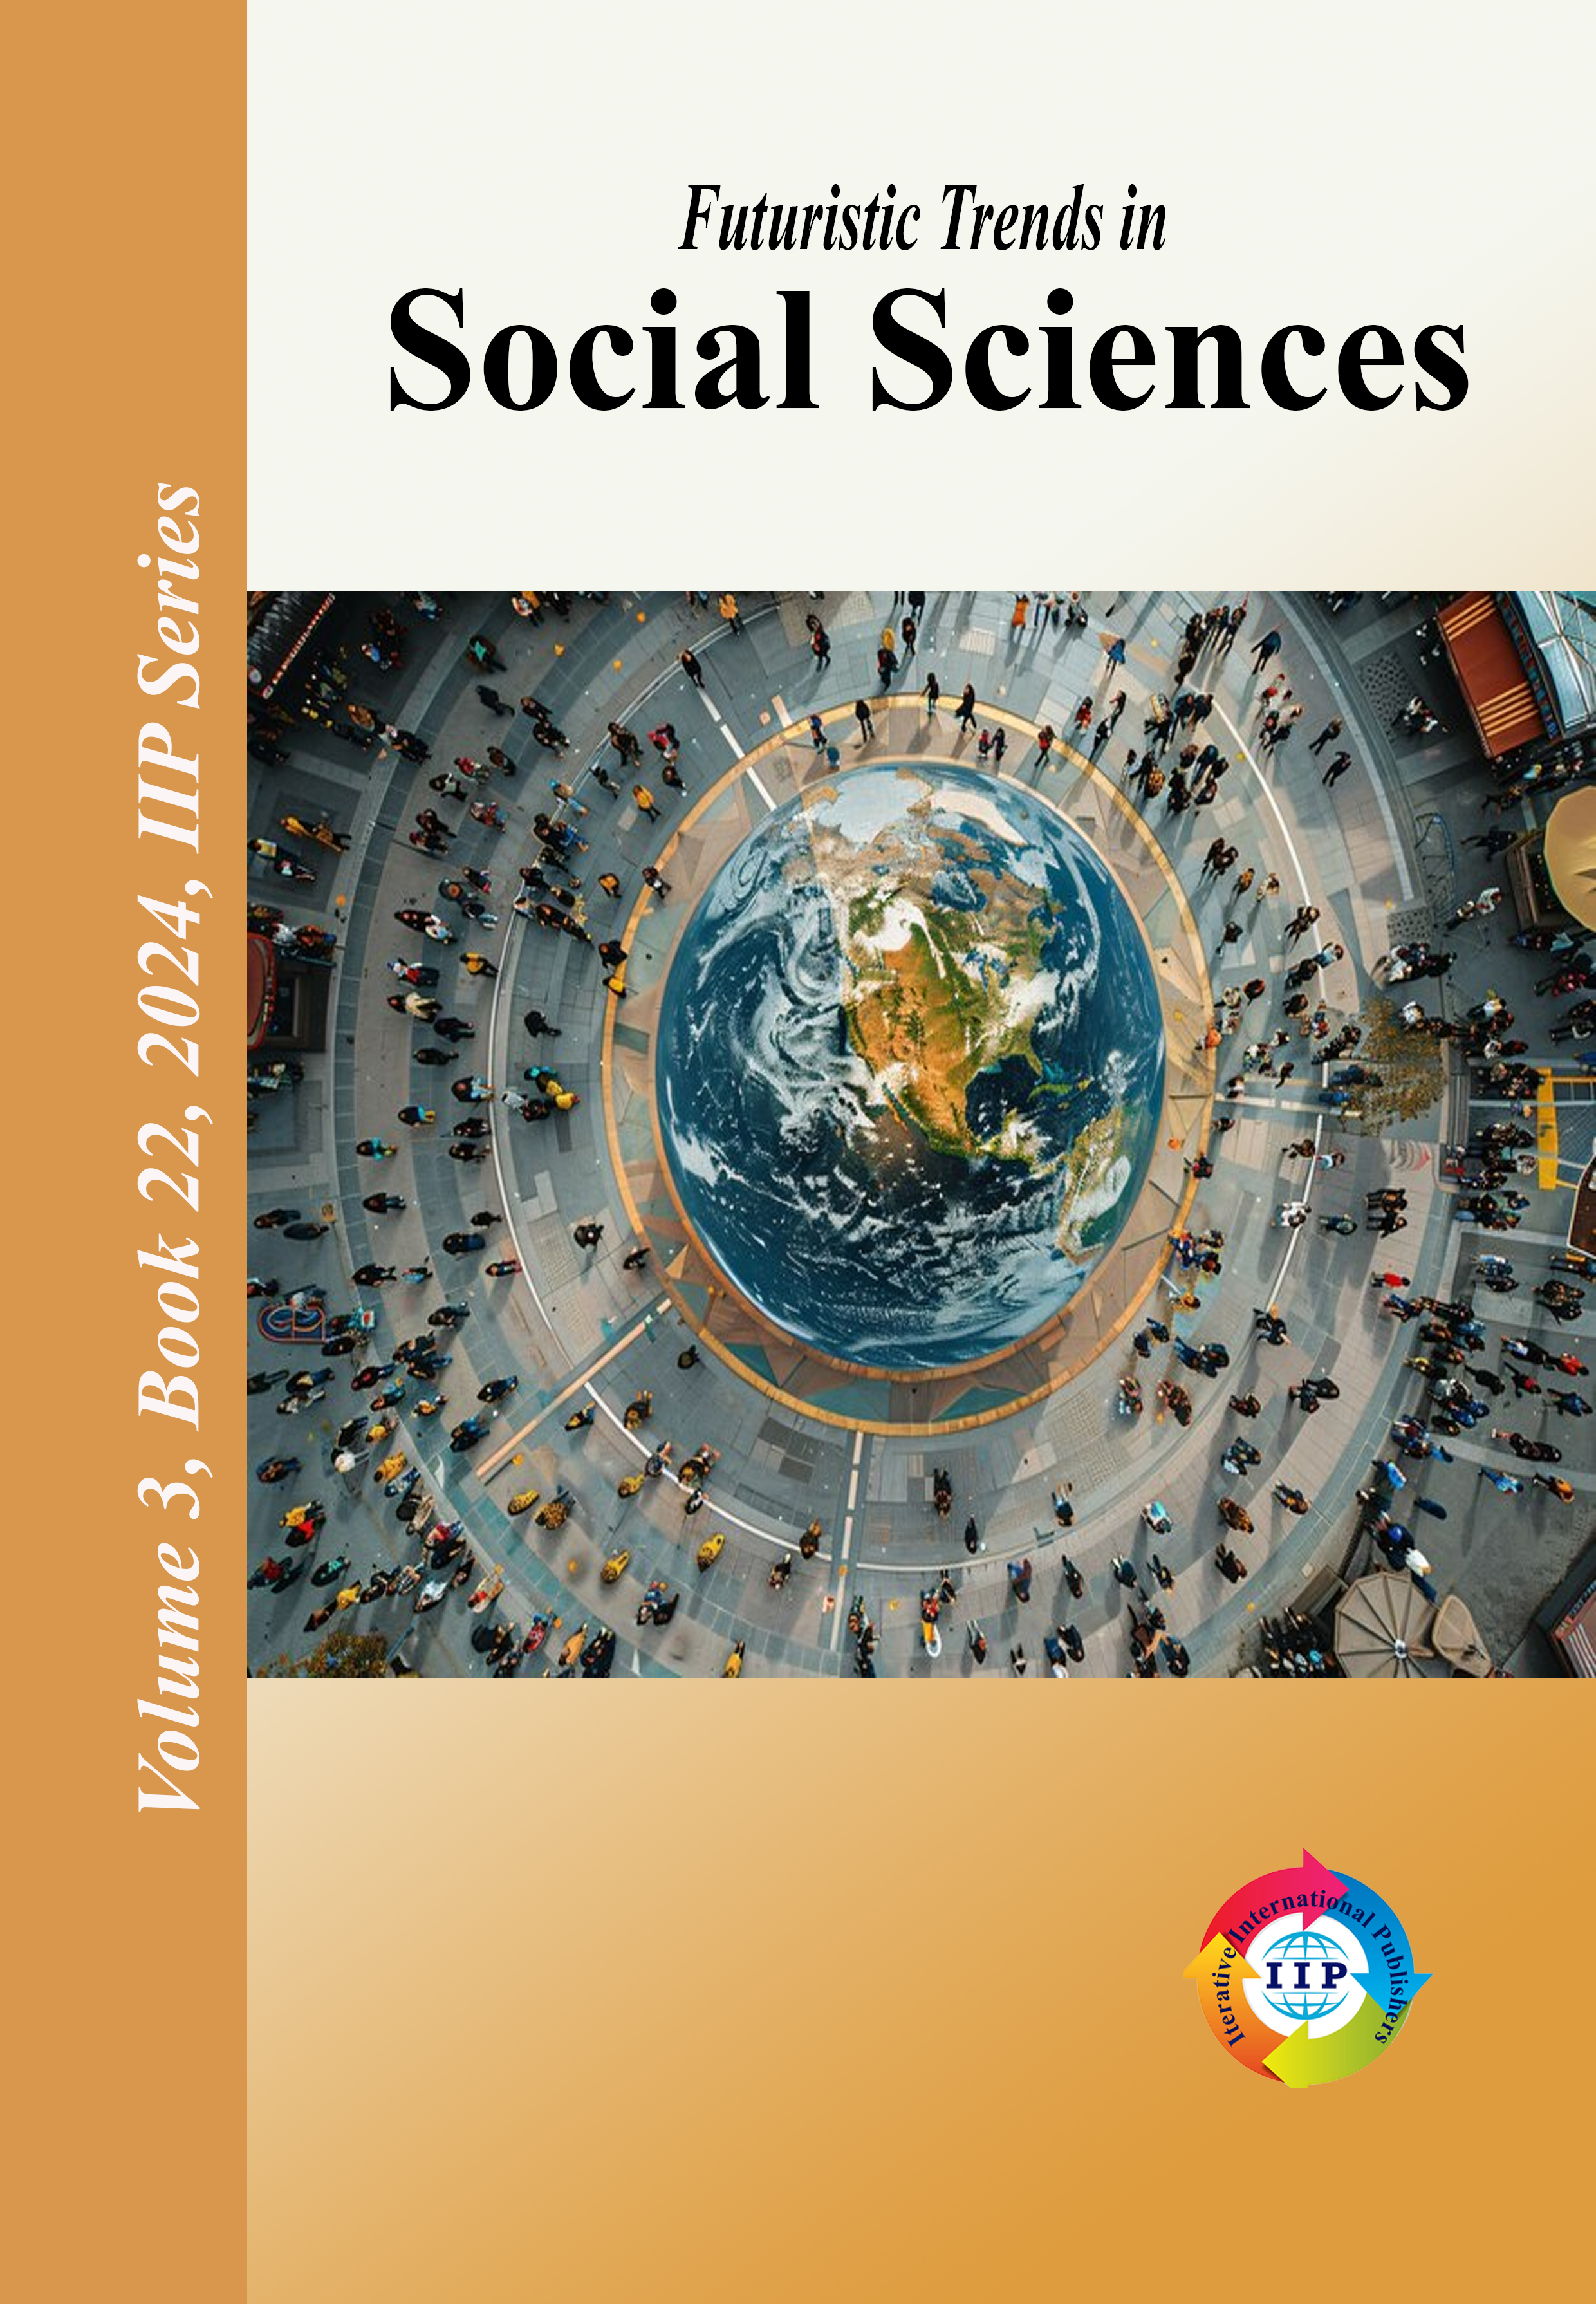 Futuristic Trends in Social Sciences Volume 3 Book 22